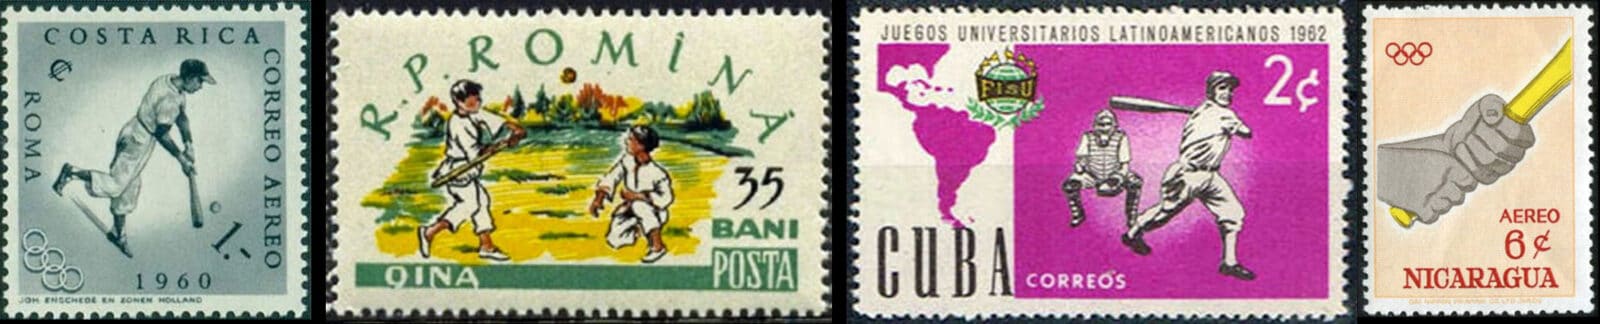 International Baseball Postage Stamps (1960 to 1969)